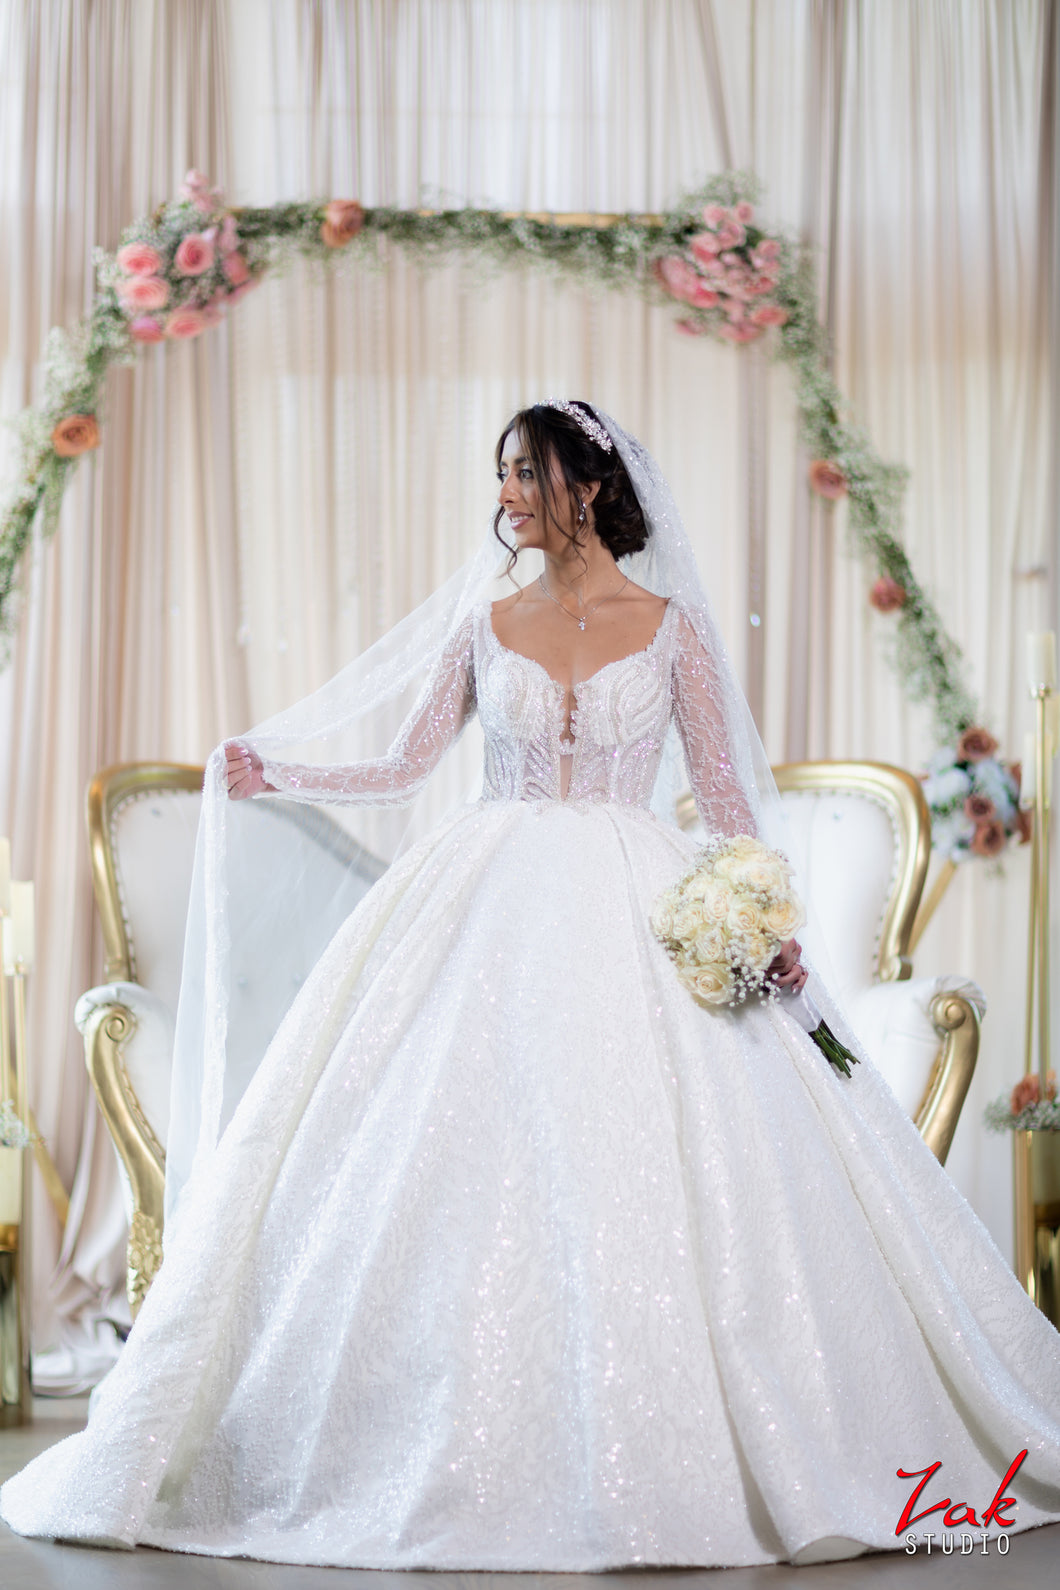 Amalia carrara '000' wedding dress size-04 PREOWNED